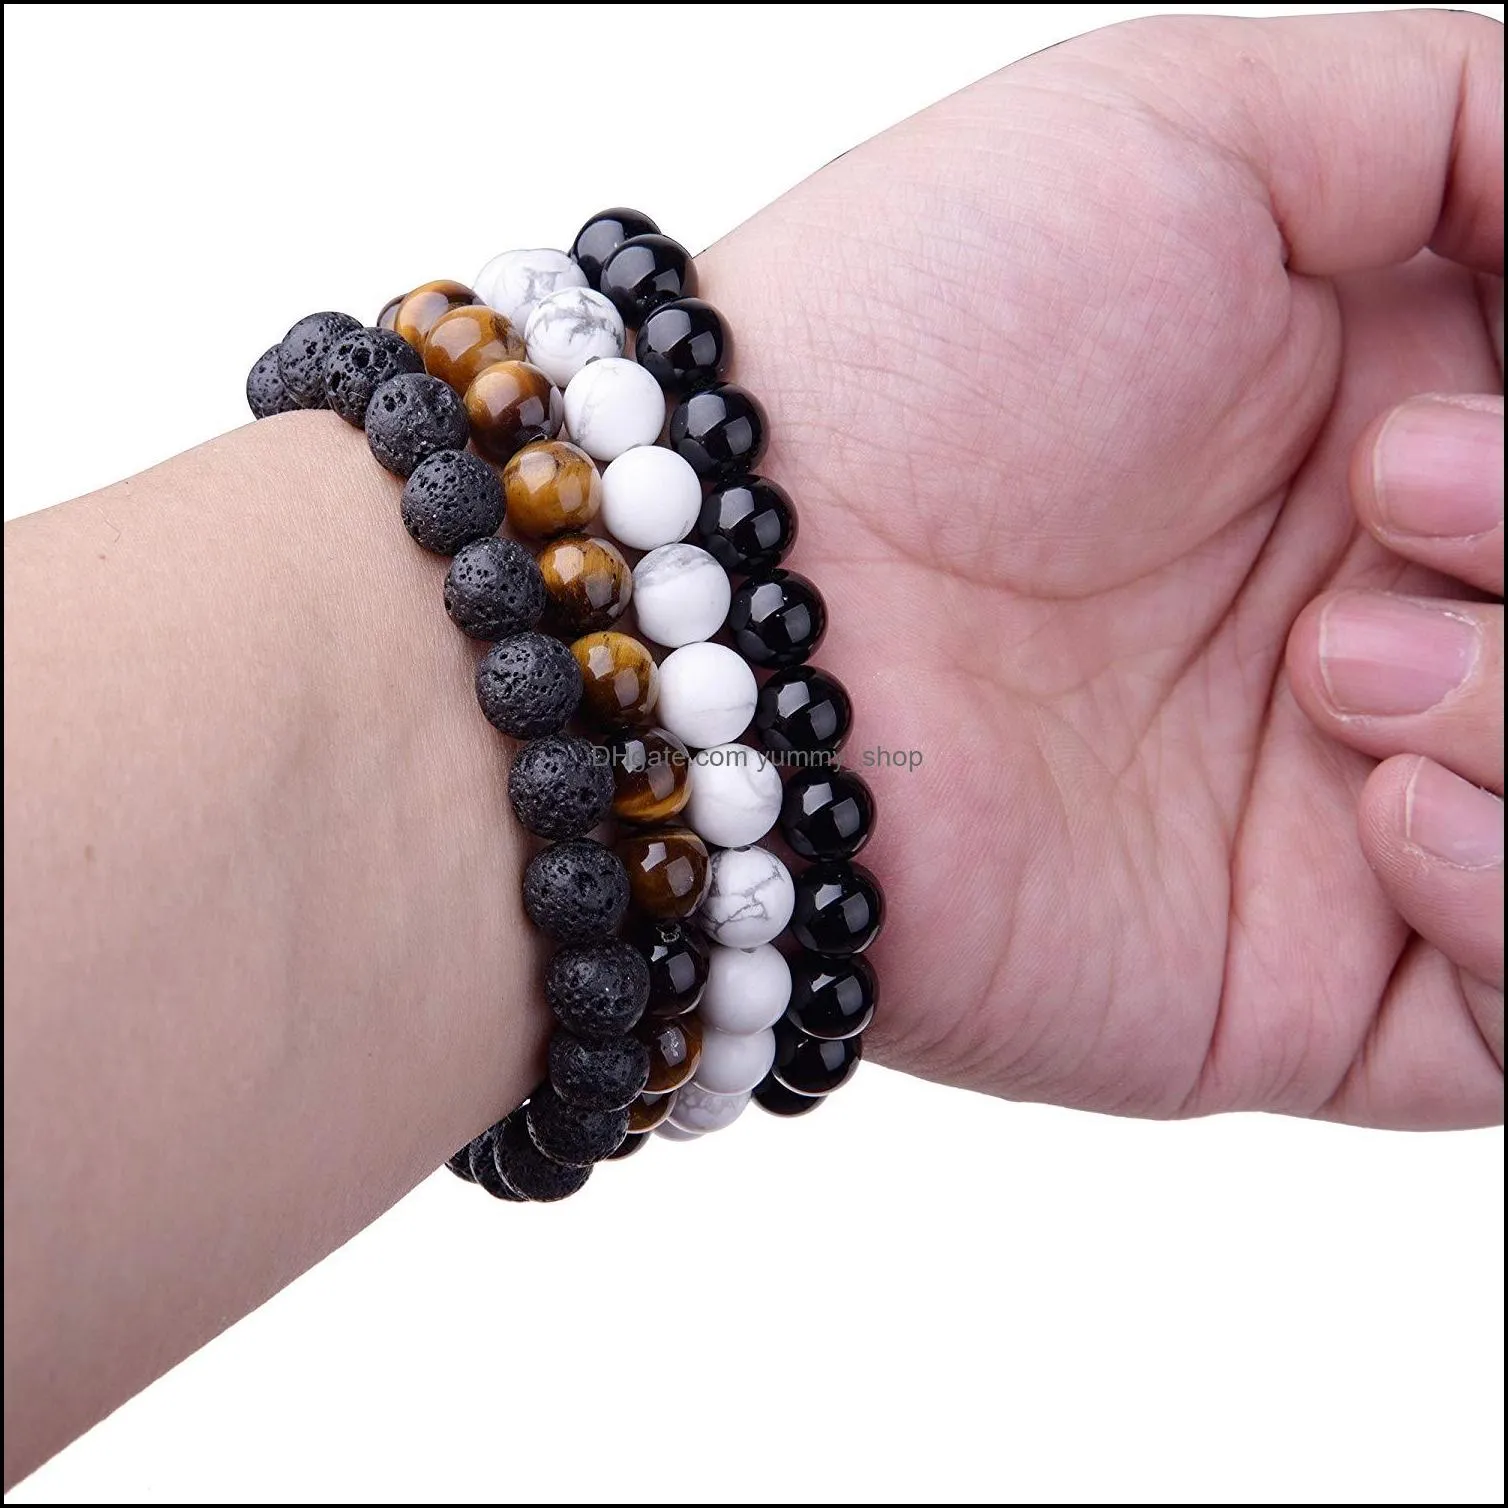 8mm black natural lava stone bead bracelet for men women adjustable oil perfume diffuser healing bracelet stretch yoga jewelry